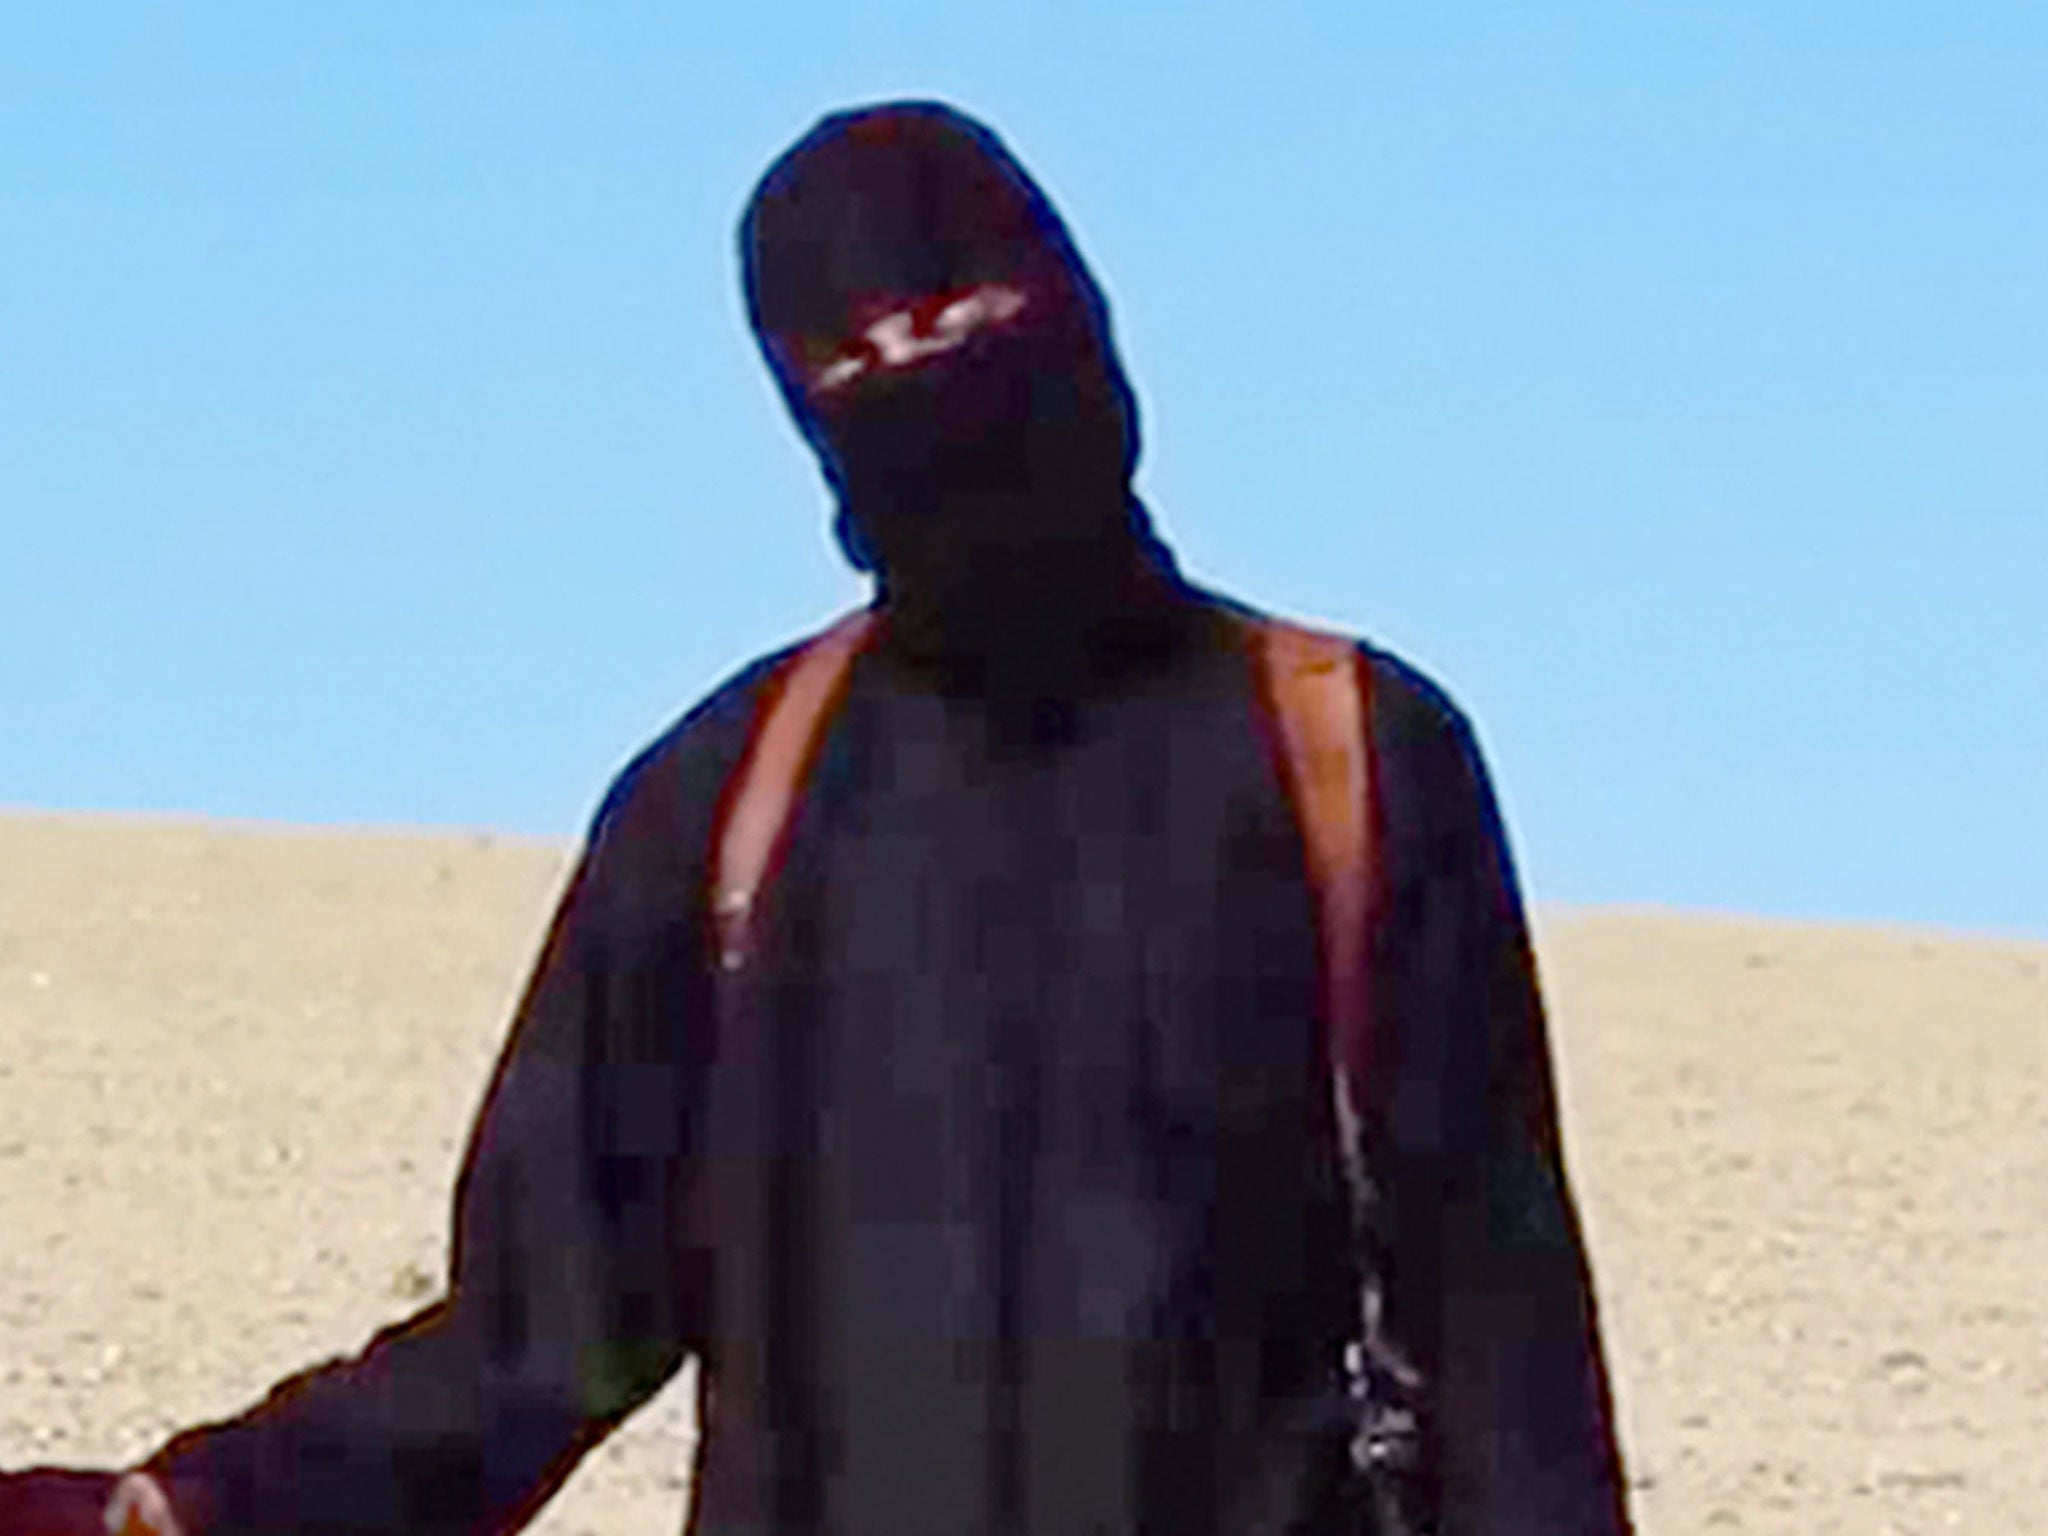 Jihadi John Fbi Identifies Isis Militant Who Beheaded British Aid Worker David Haines And